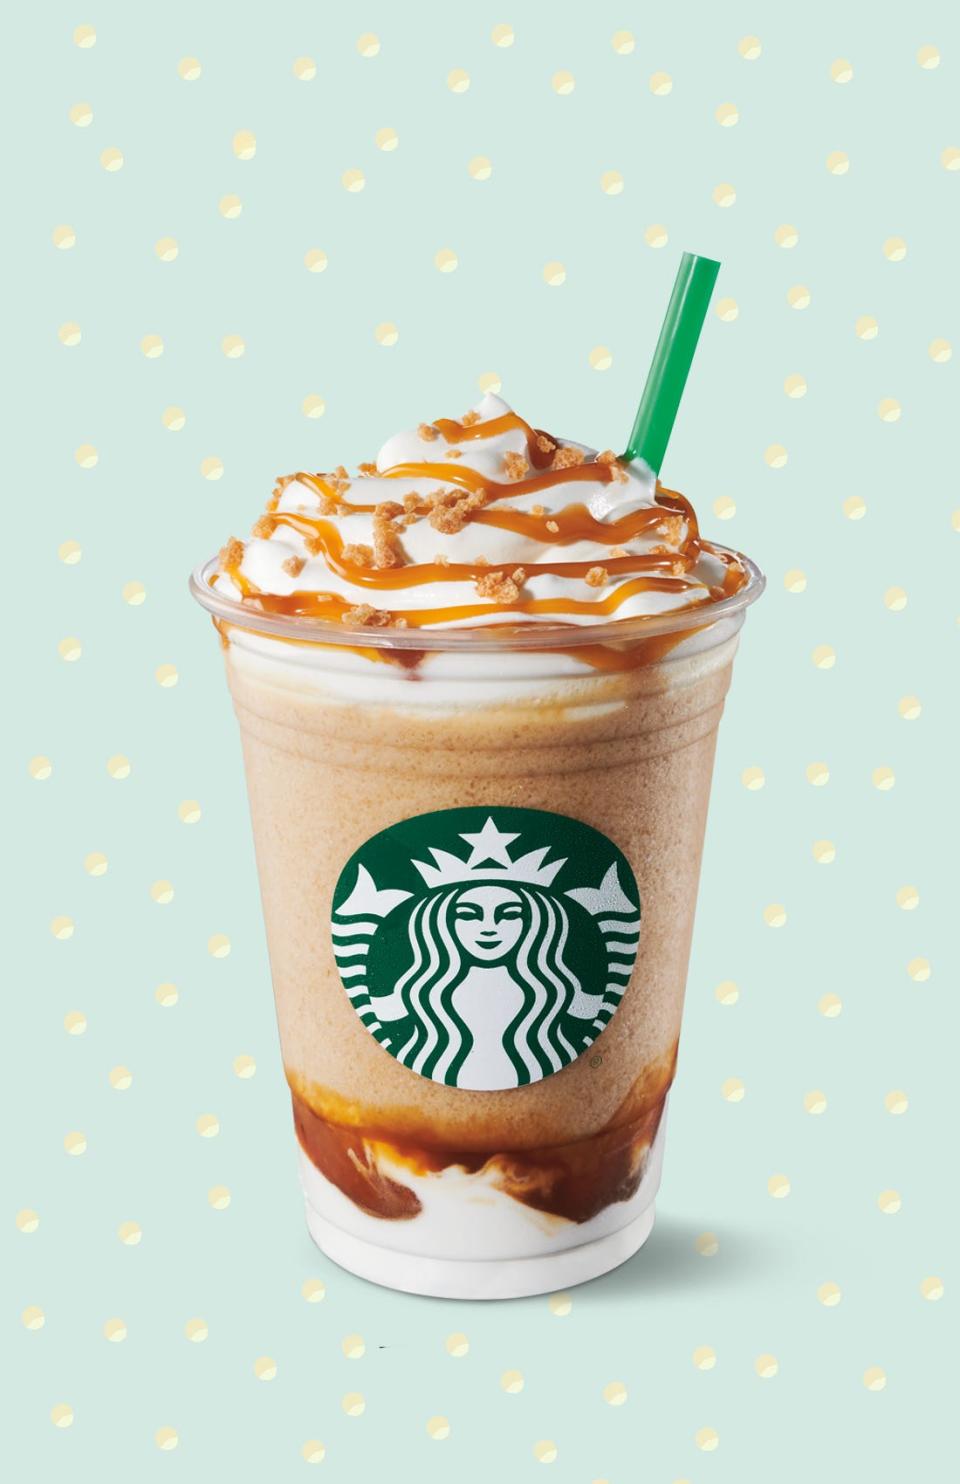 The Caramel Ribbon Crunch Frappuccino.